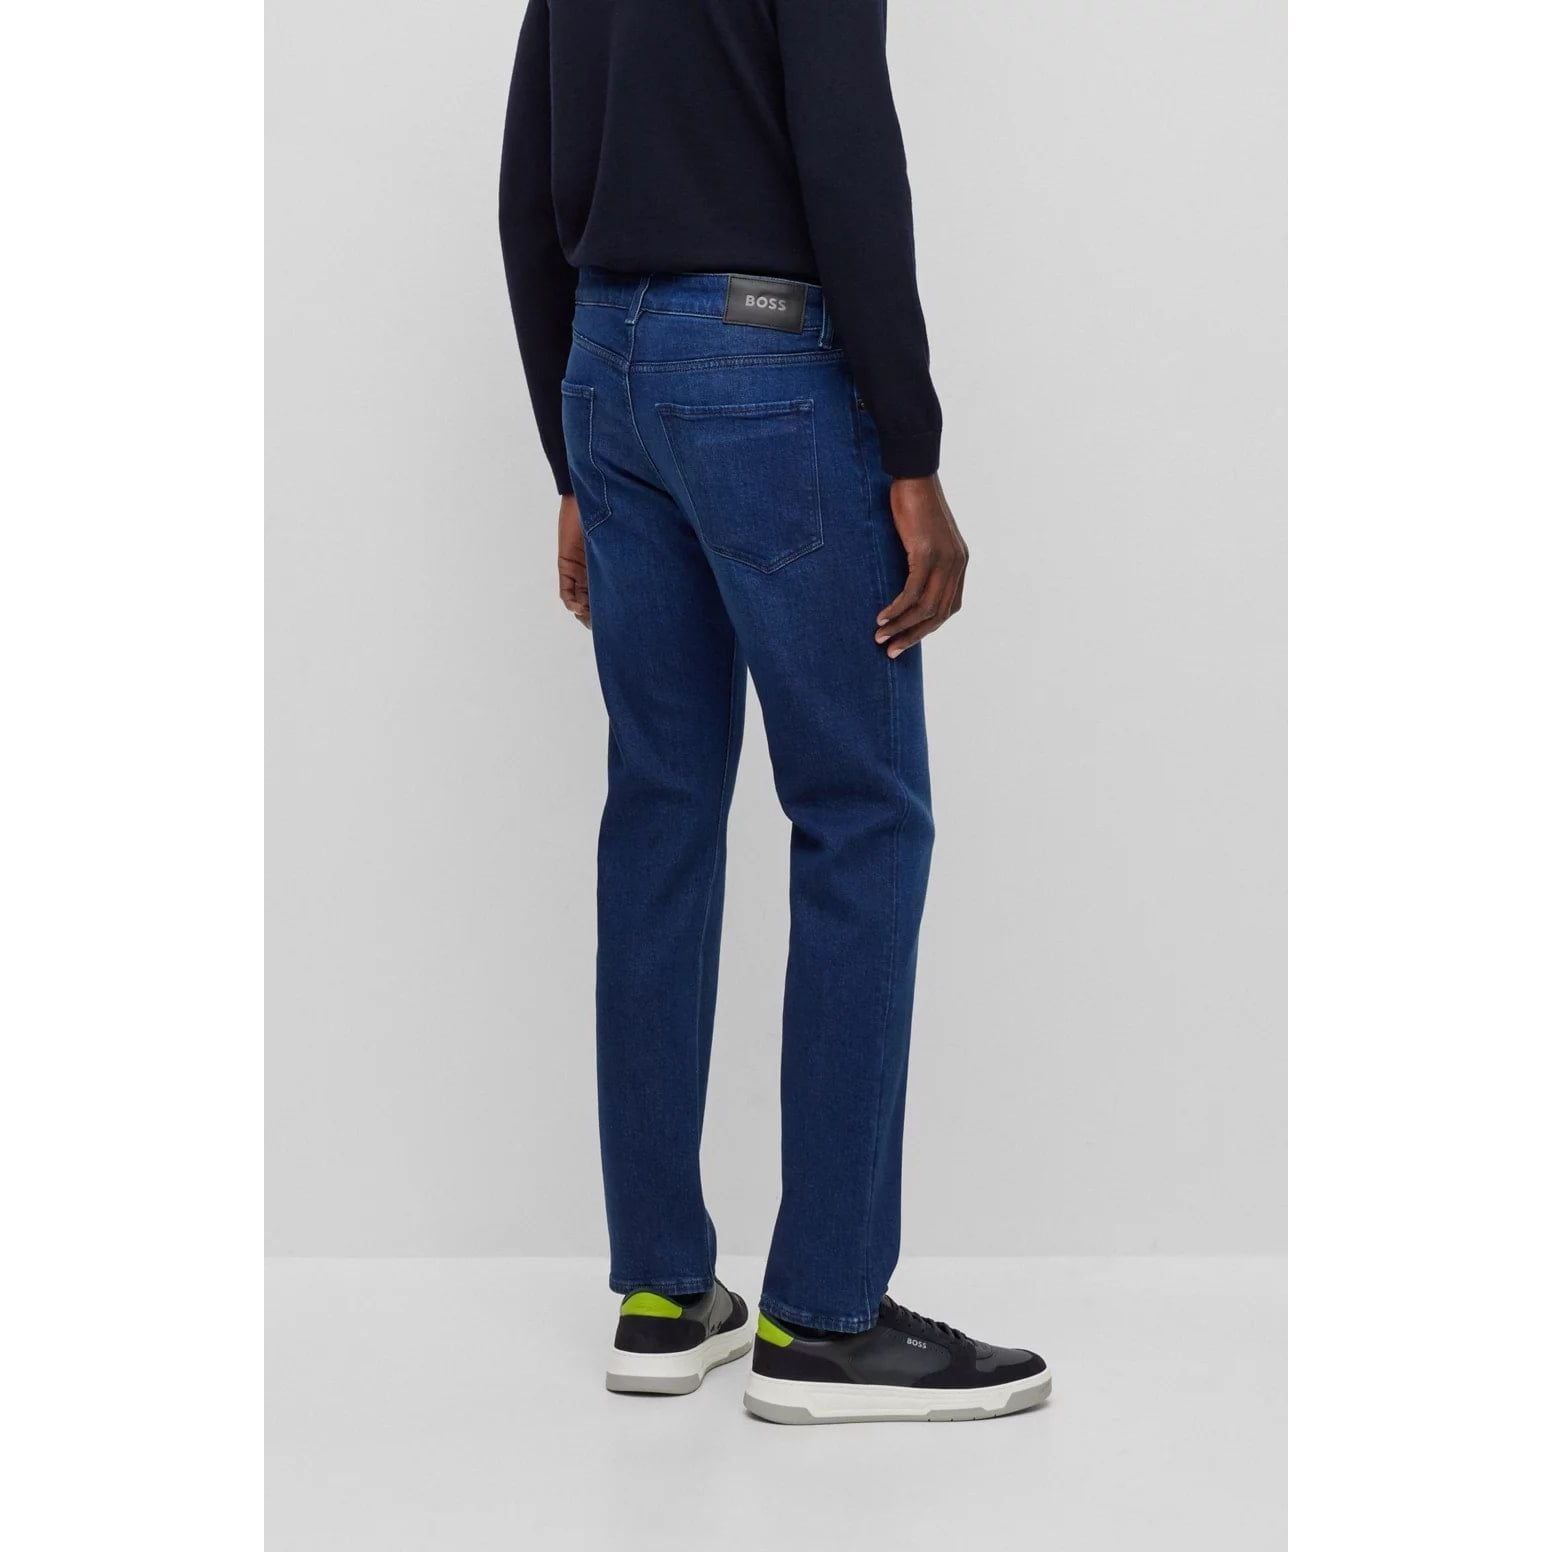 HUGO - Tapered-fit jeans in blue comfort-stretch denim